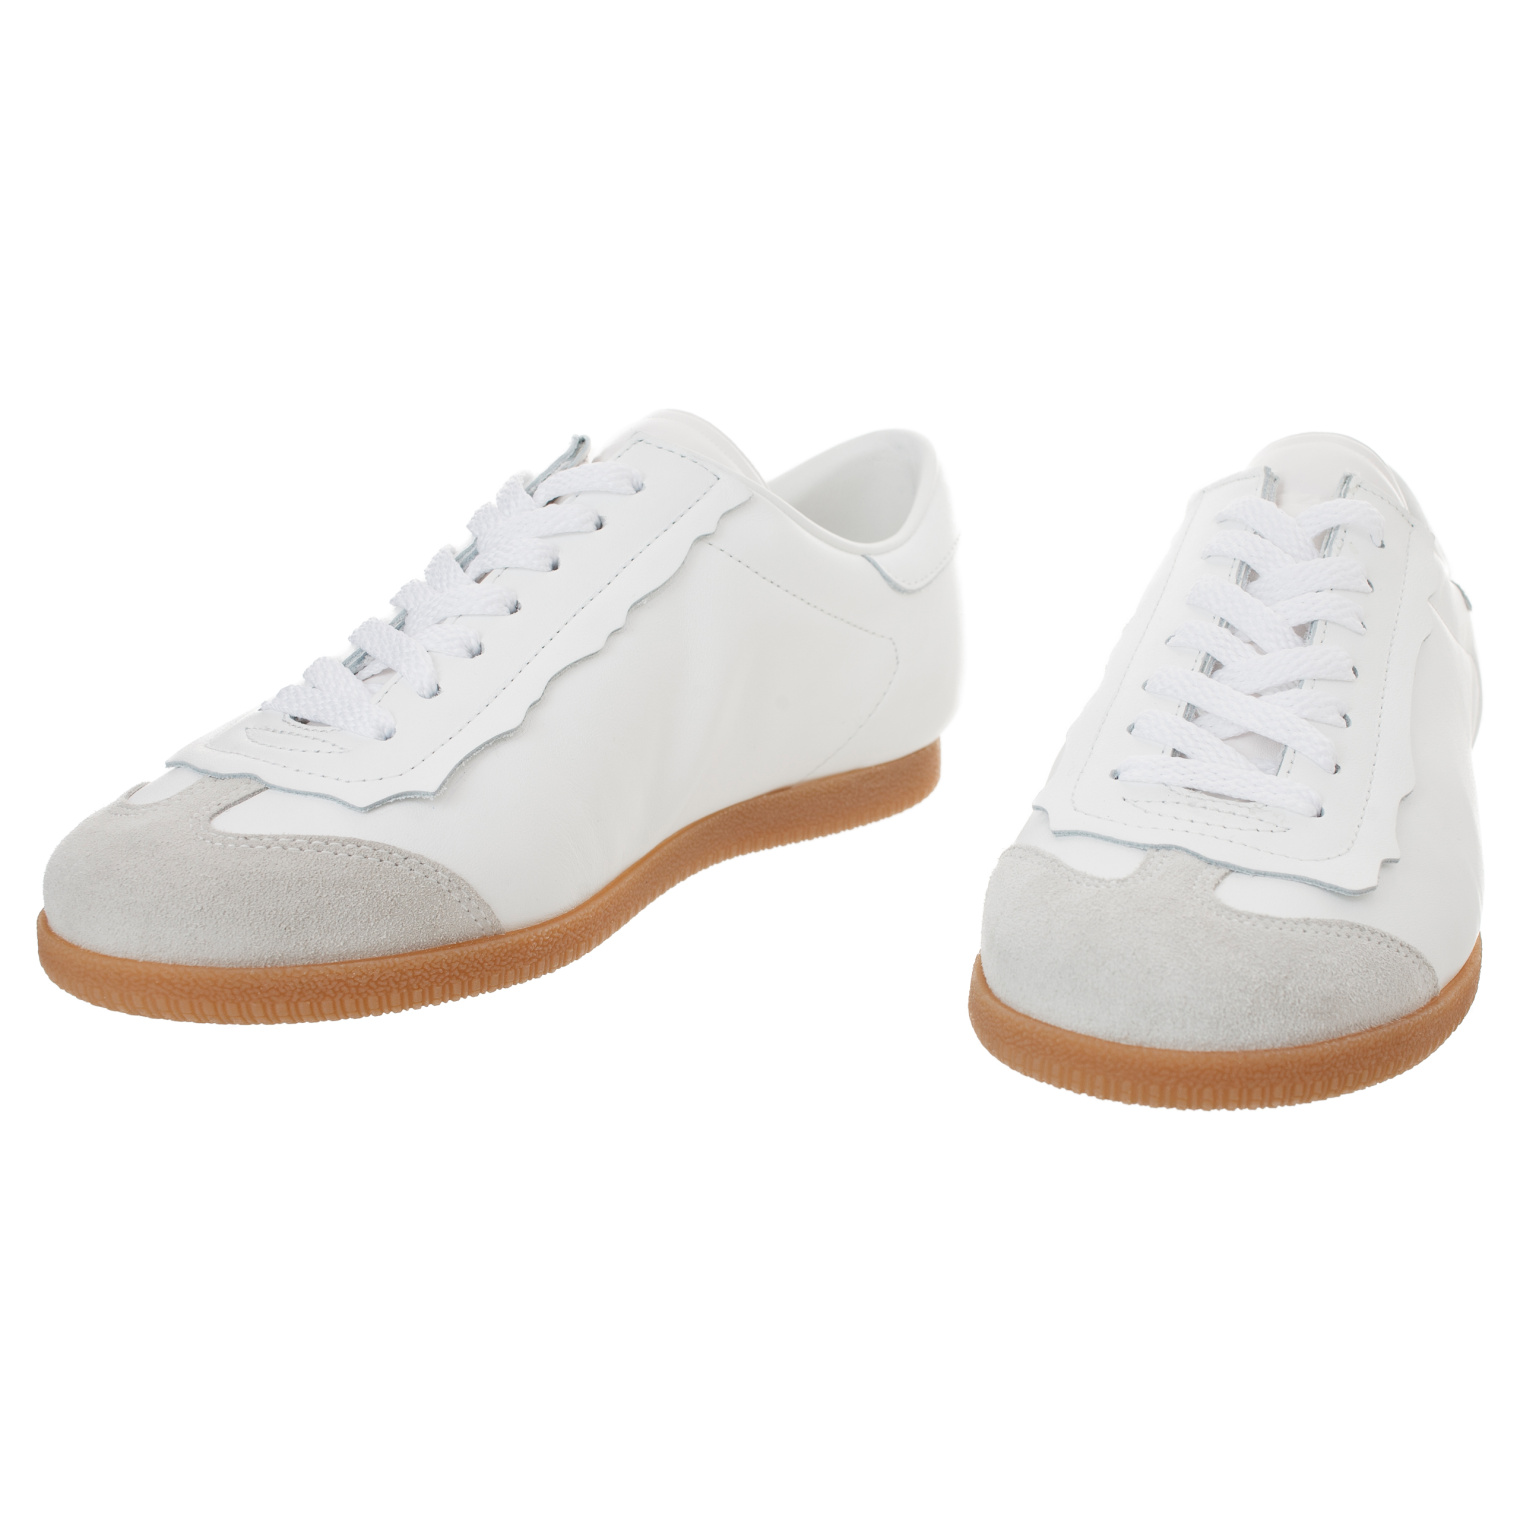 Maison Margiela White leather sneakers